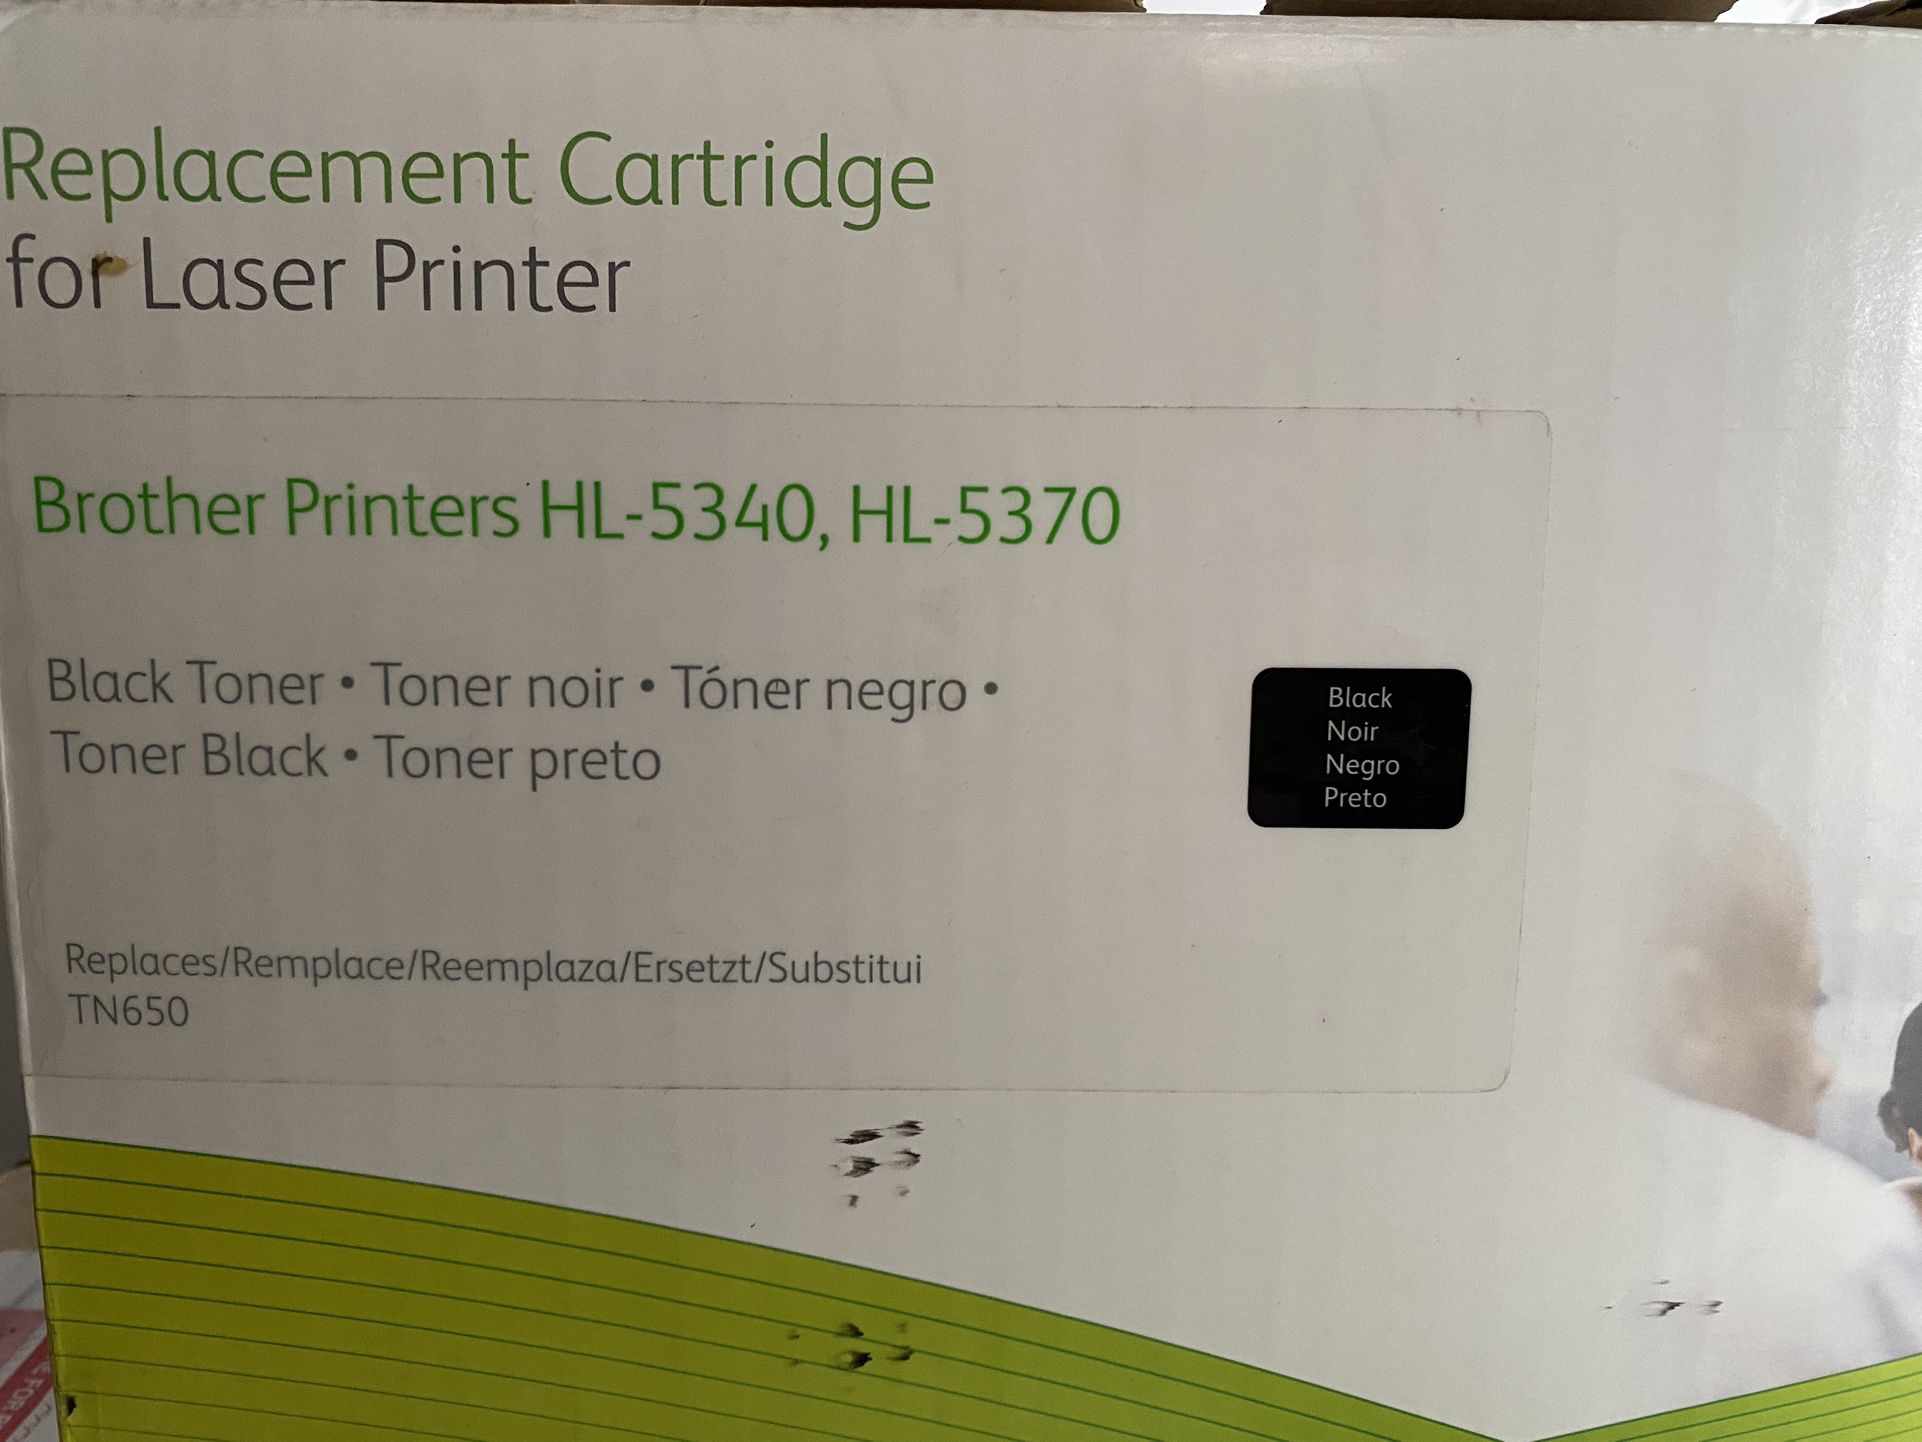 Xerox Replacement Cartridge for Laser Printer - Brother Printers HL- 5340 Black Toner